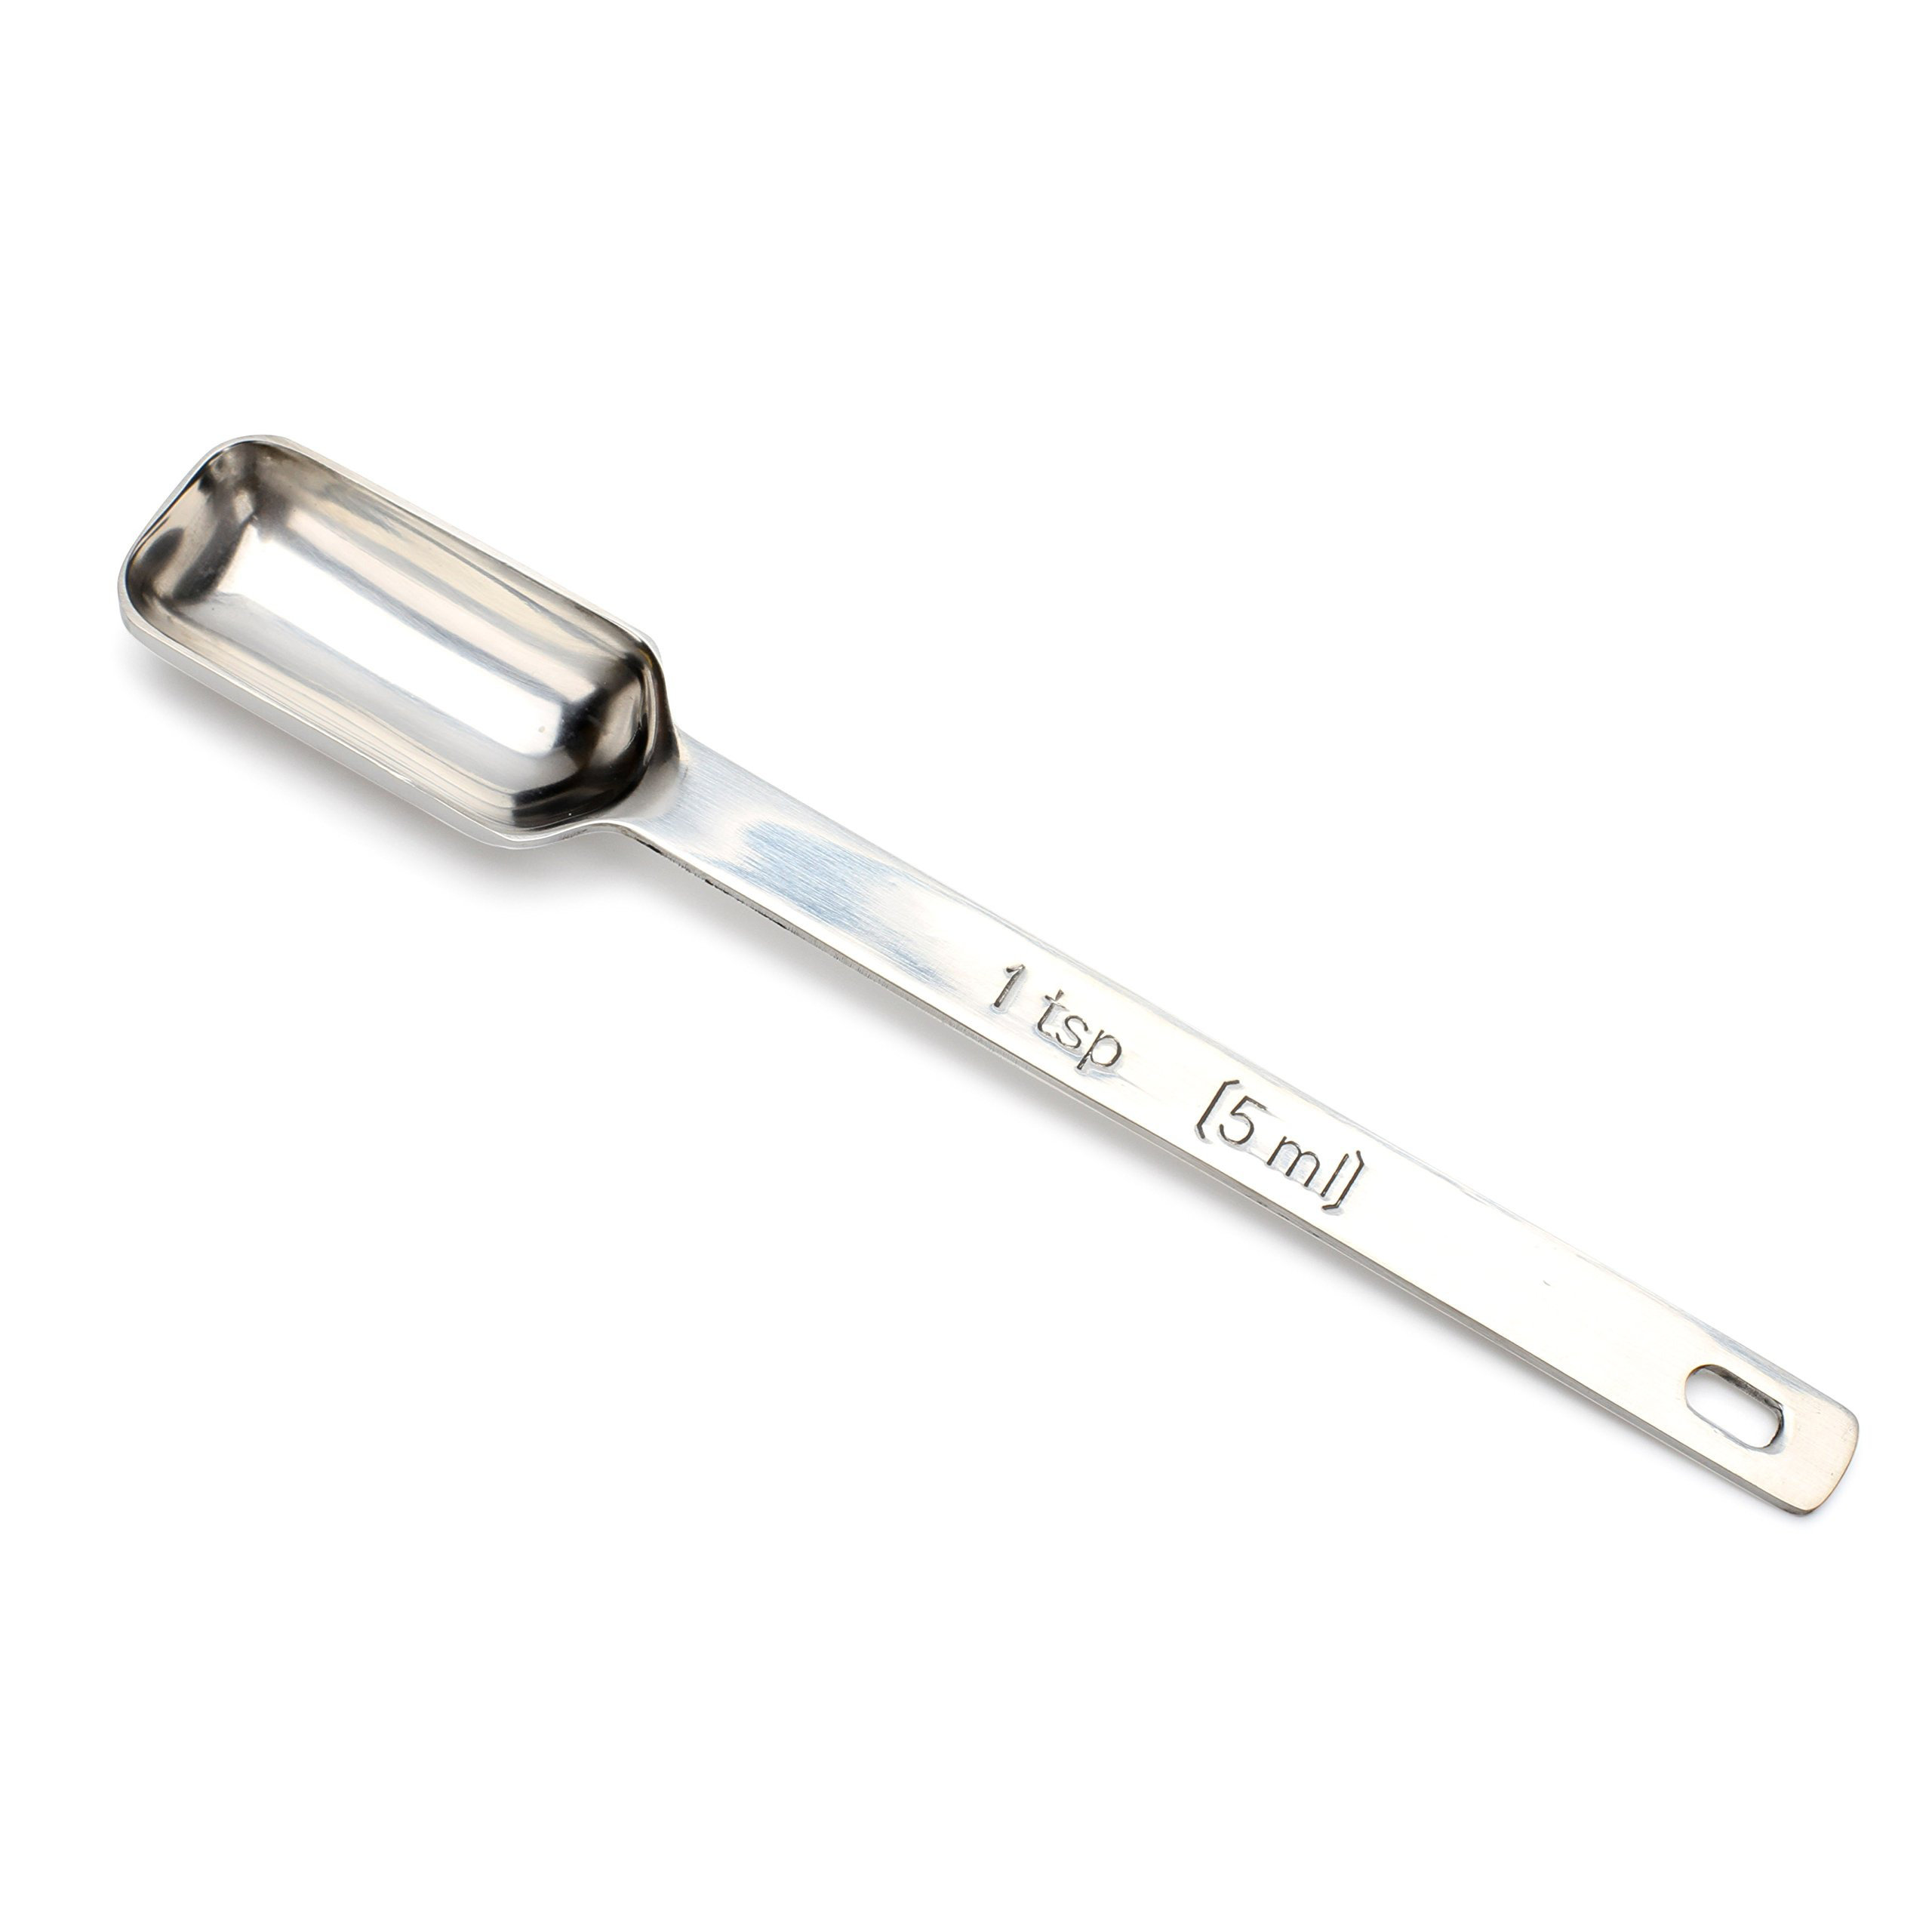 2lb Depot Stainless Steel 1/2 Teaspoon Measuring Spoon - Silver